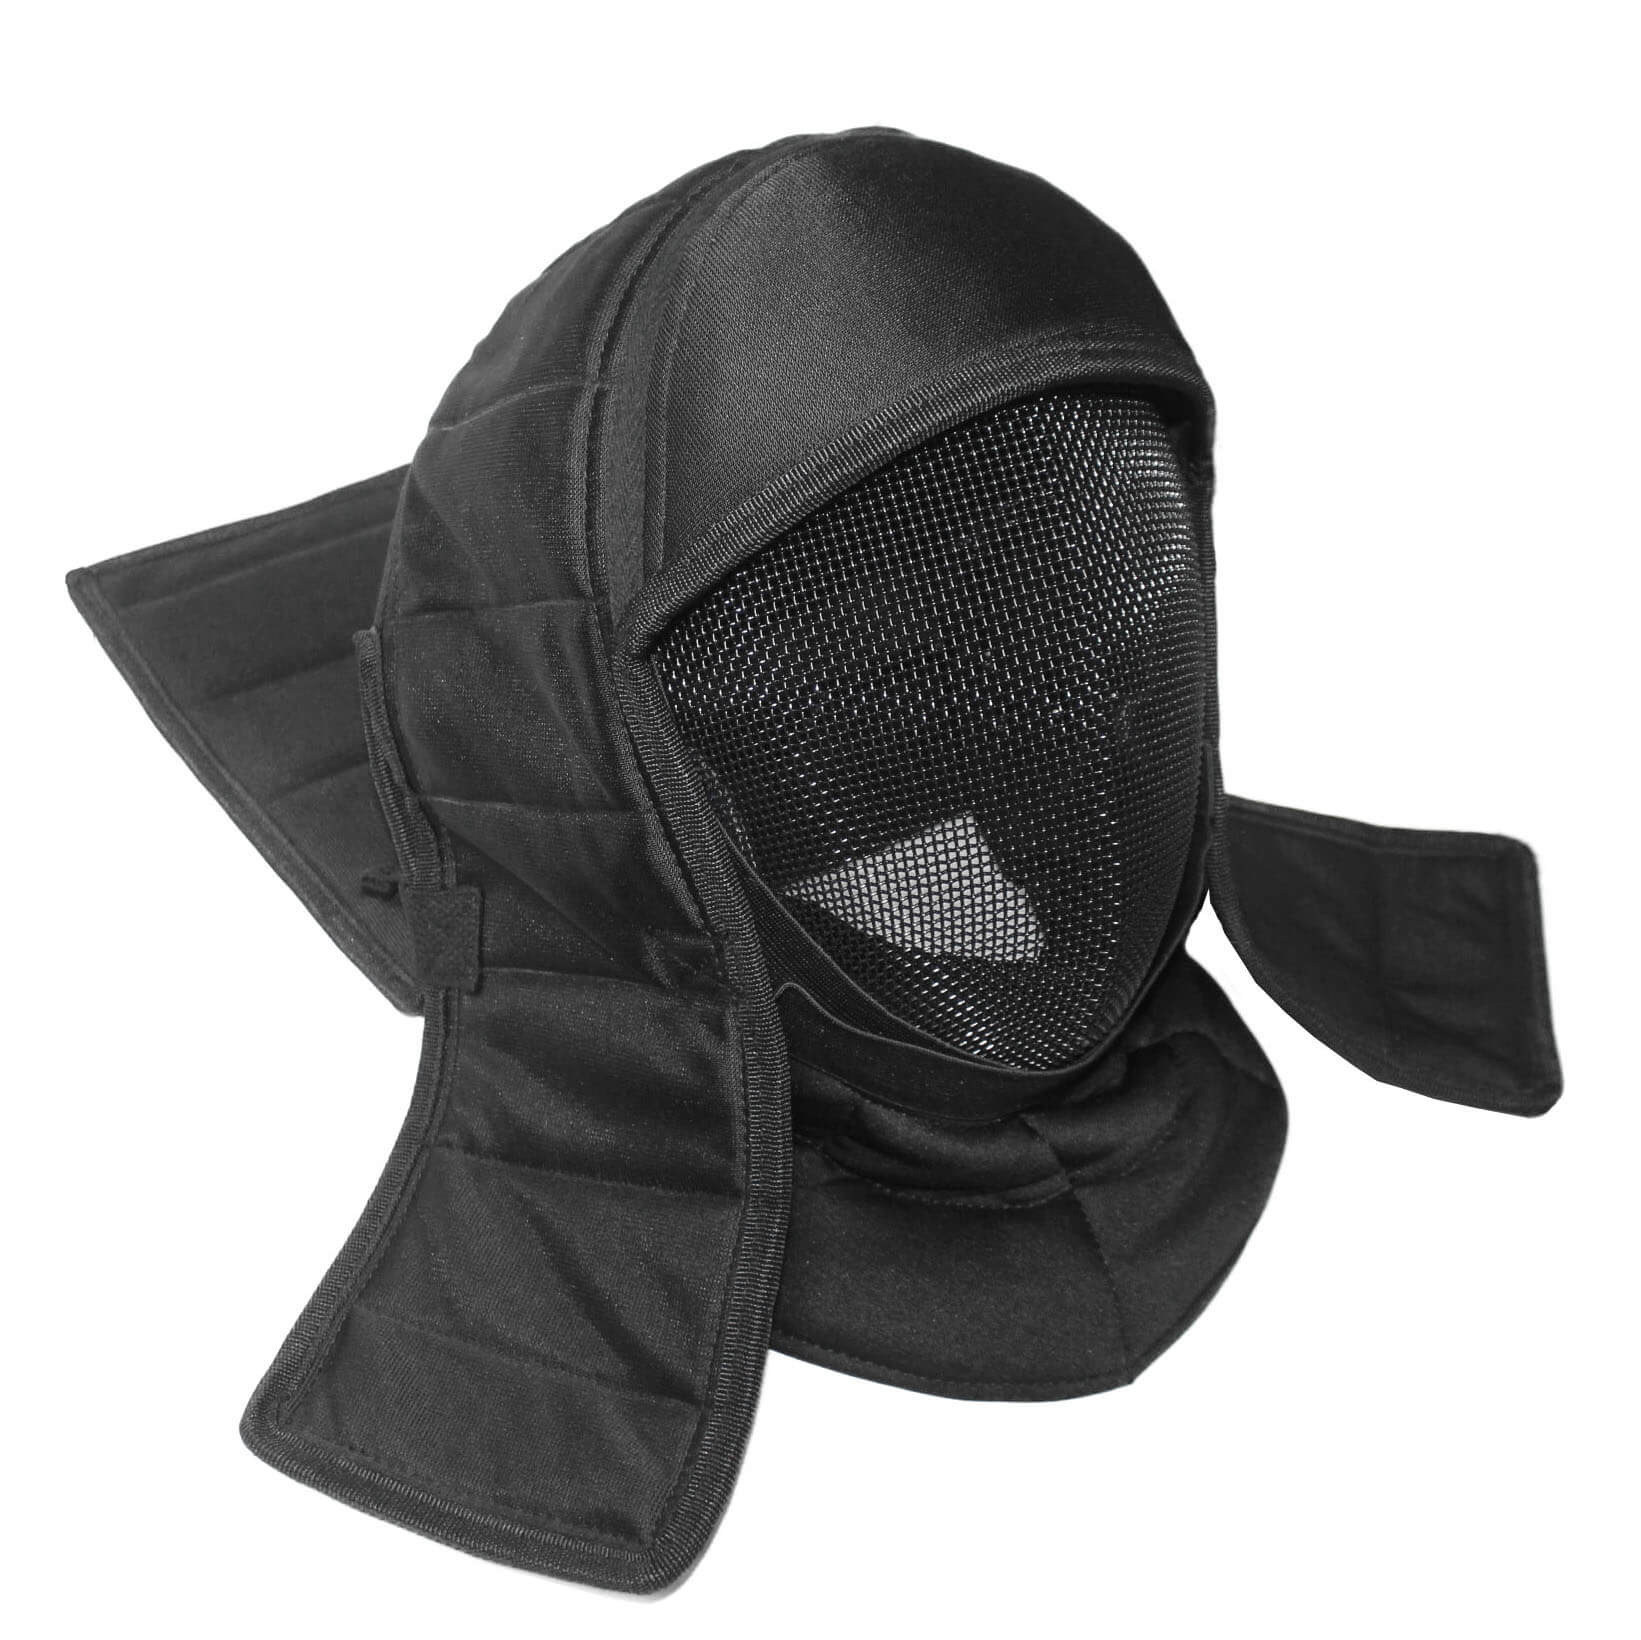 LEONARK 800N Hema Fencing Mask Overlay Helmet - Headgear